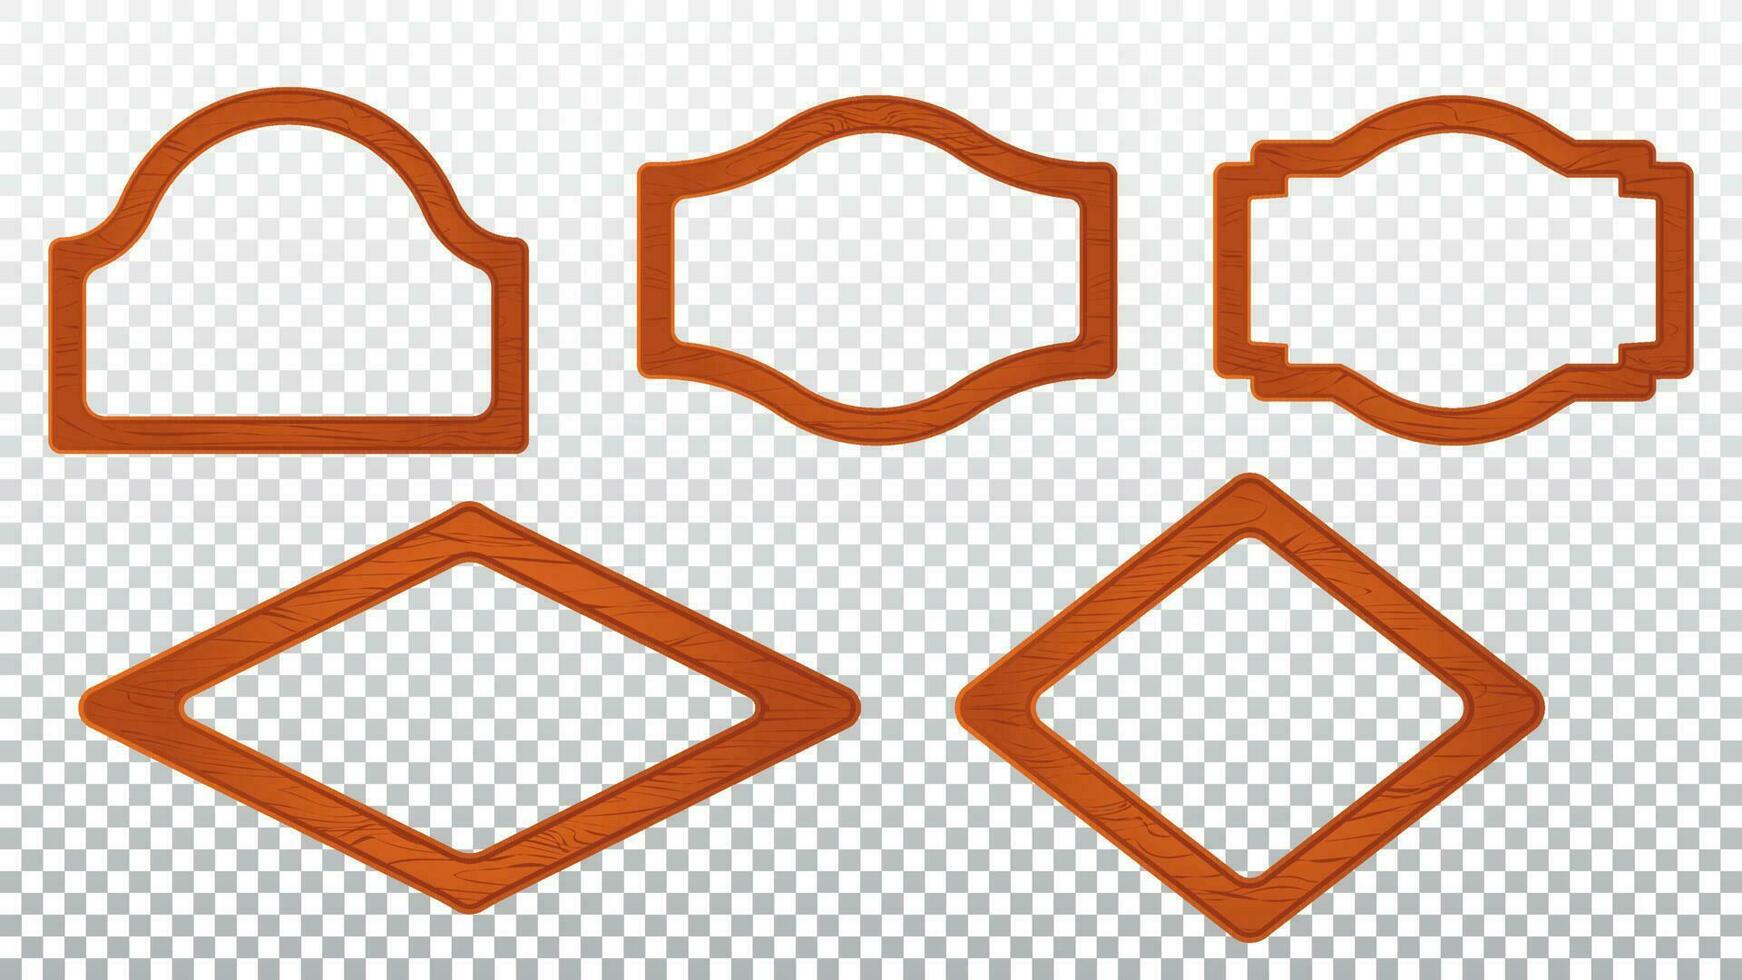 Retro orange wood sign board cartoon vector panel. Wooden texture rhombus frame banner. Ui signboard design set for farm rustic app menu template. Blank level label piece illustration collection.